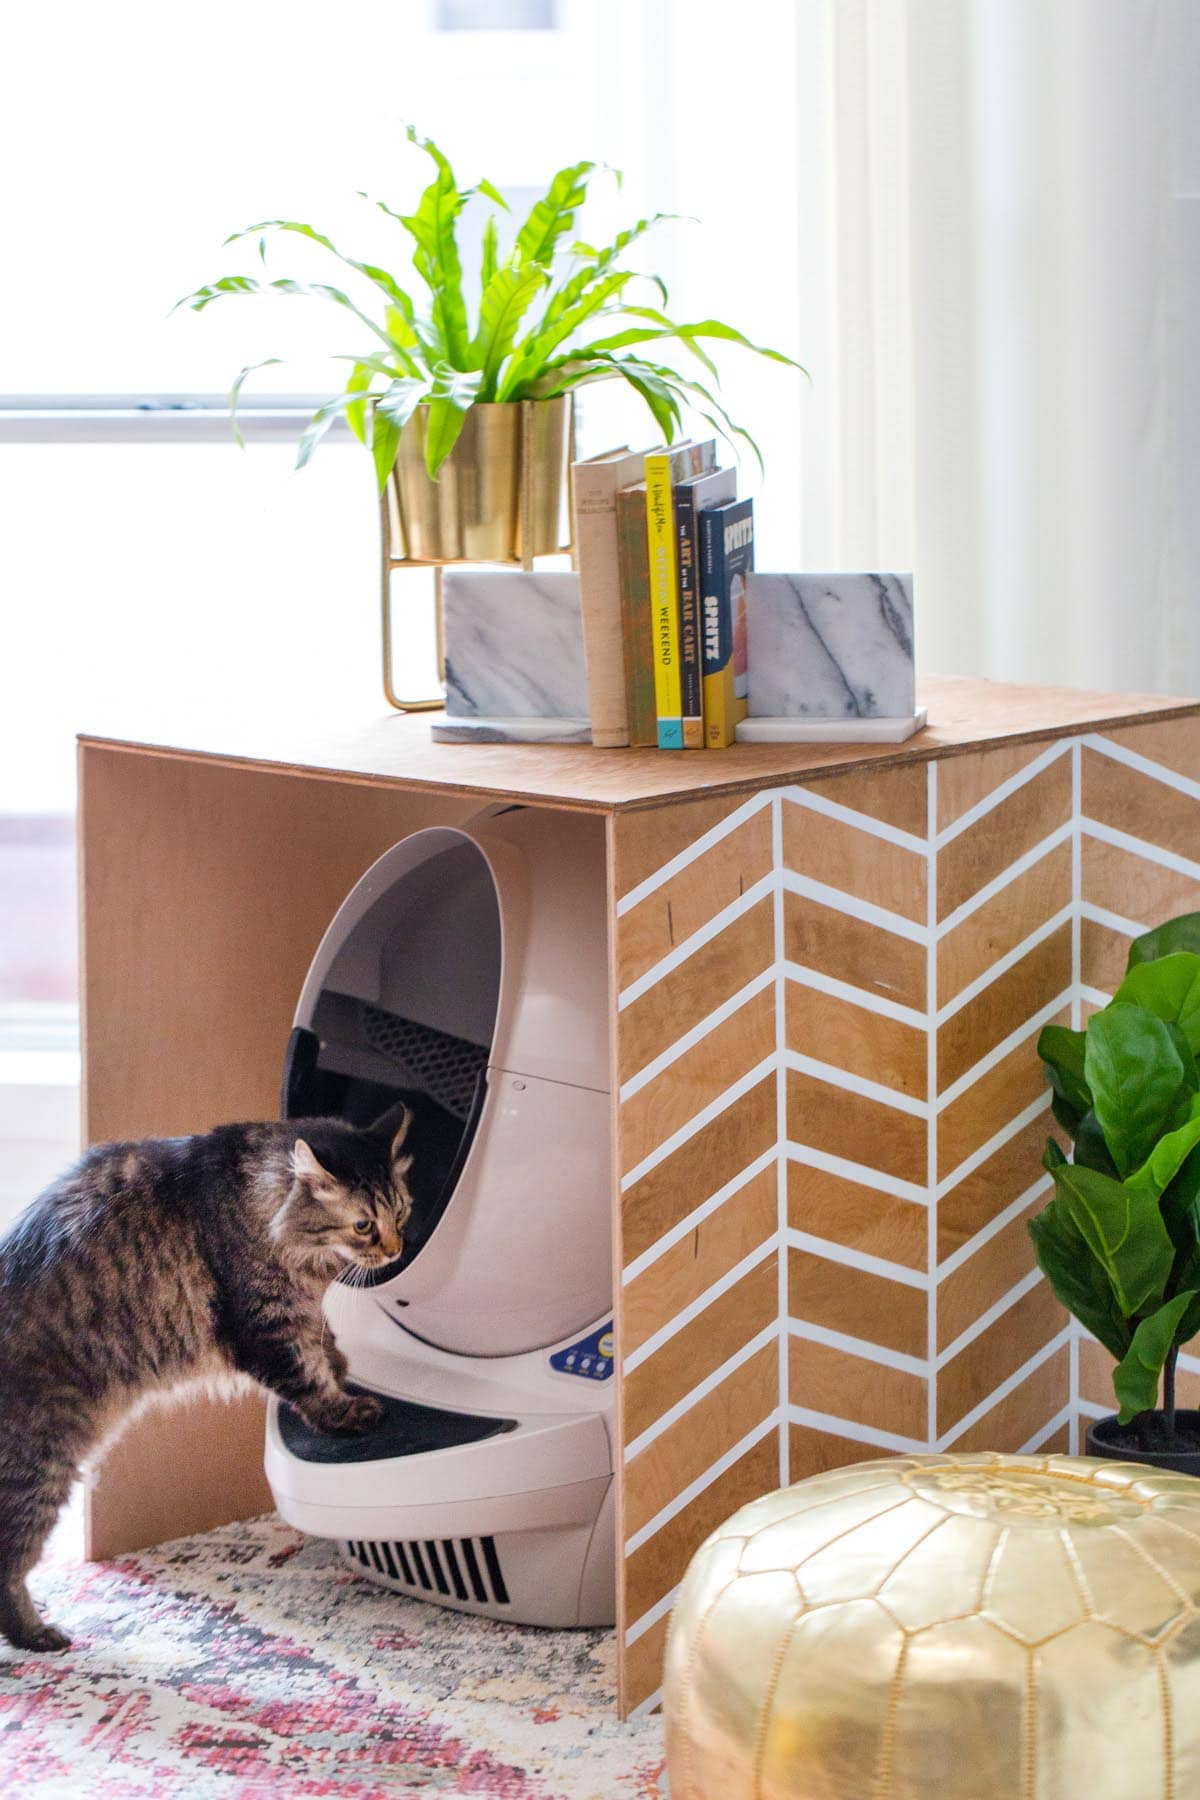 DIY Cat Litter Box Cover
 Patterned DIY Litter Box Cover Sugar & Cloth DIY Home Decor